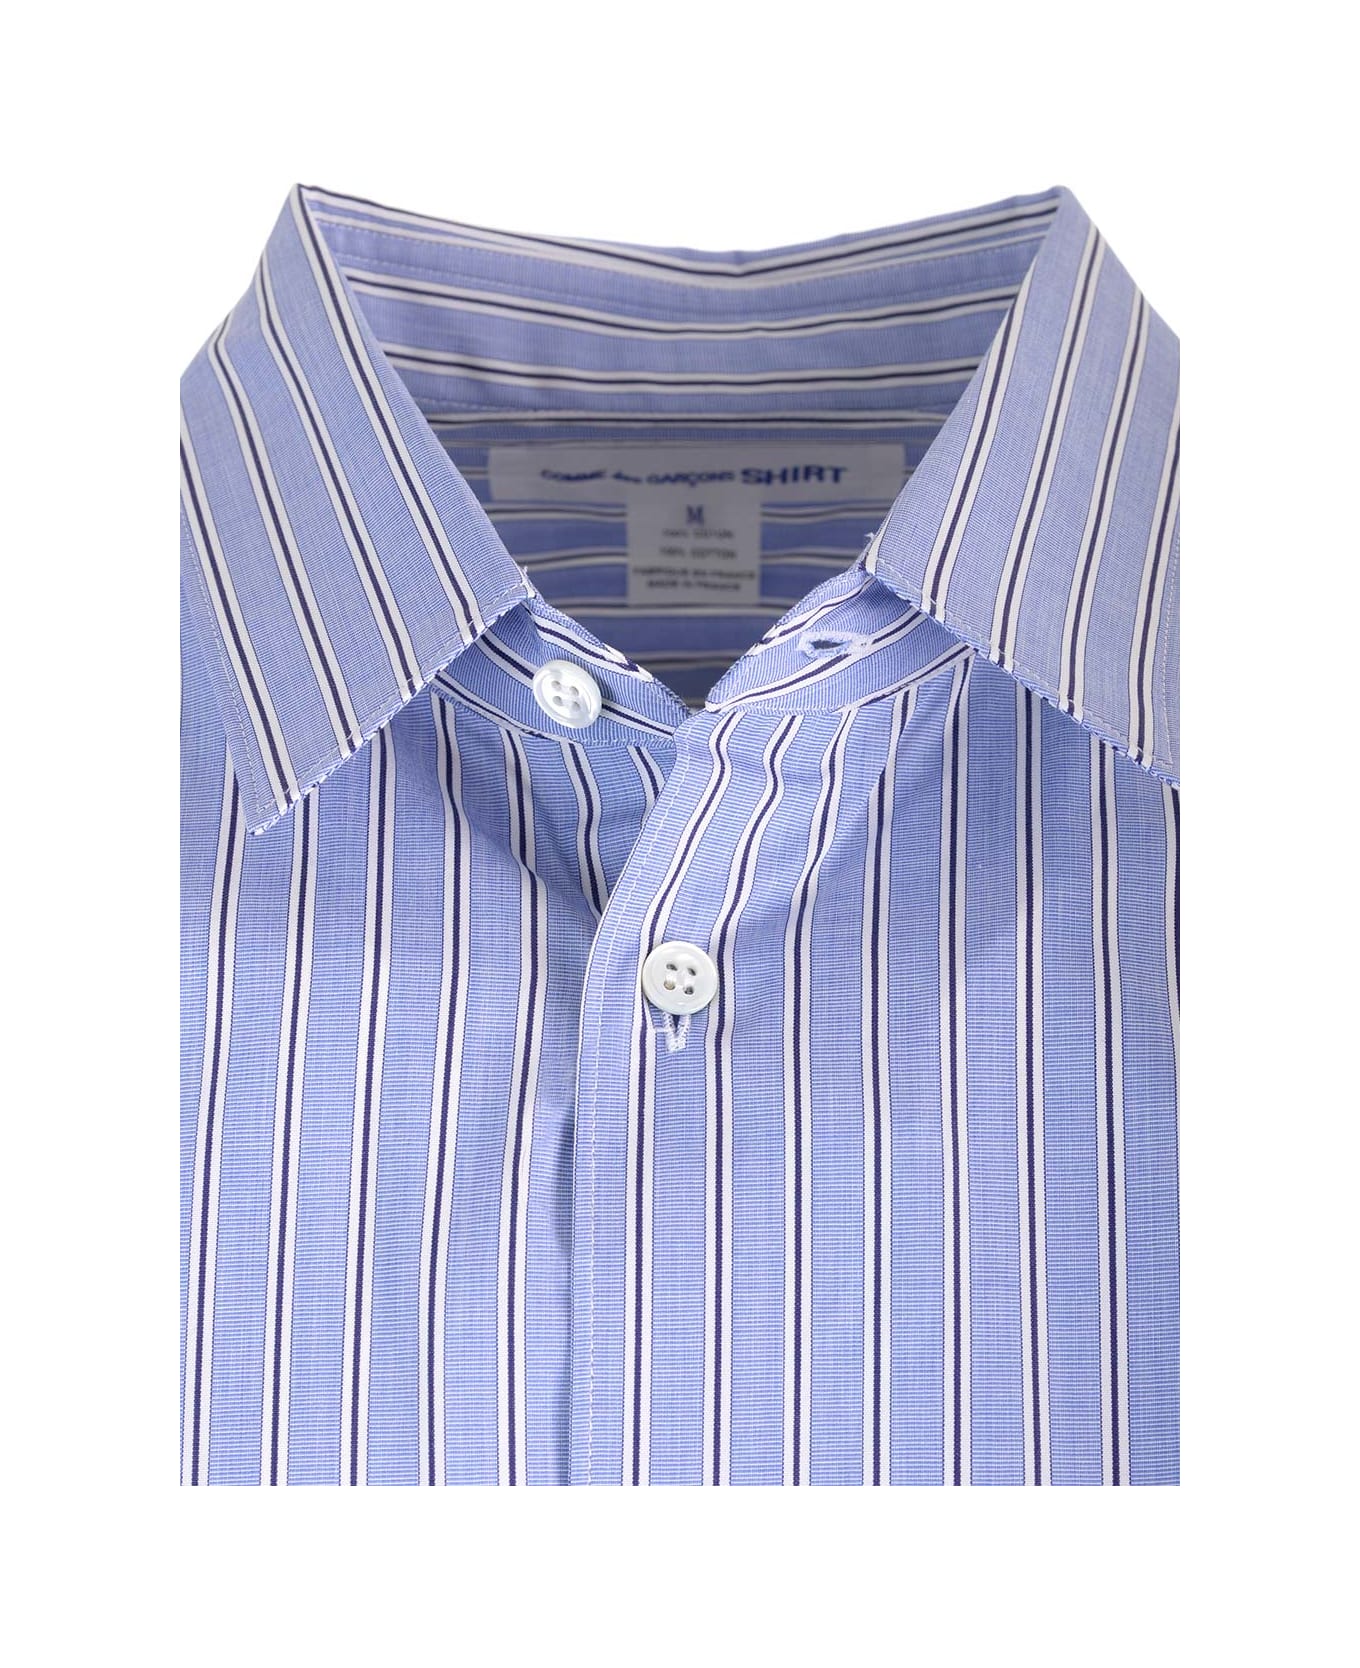 Comme des Garçons Shirt Striped Shirt With Pocket - MULTICOLOR